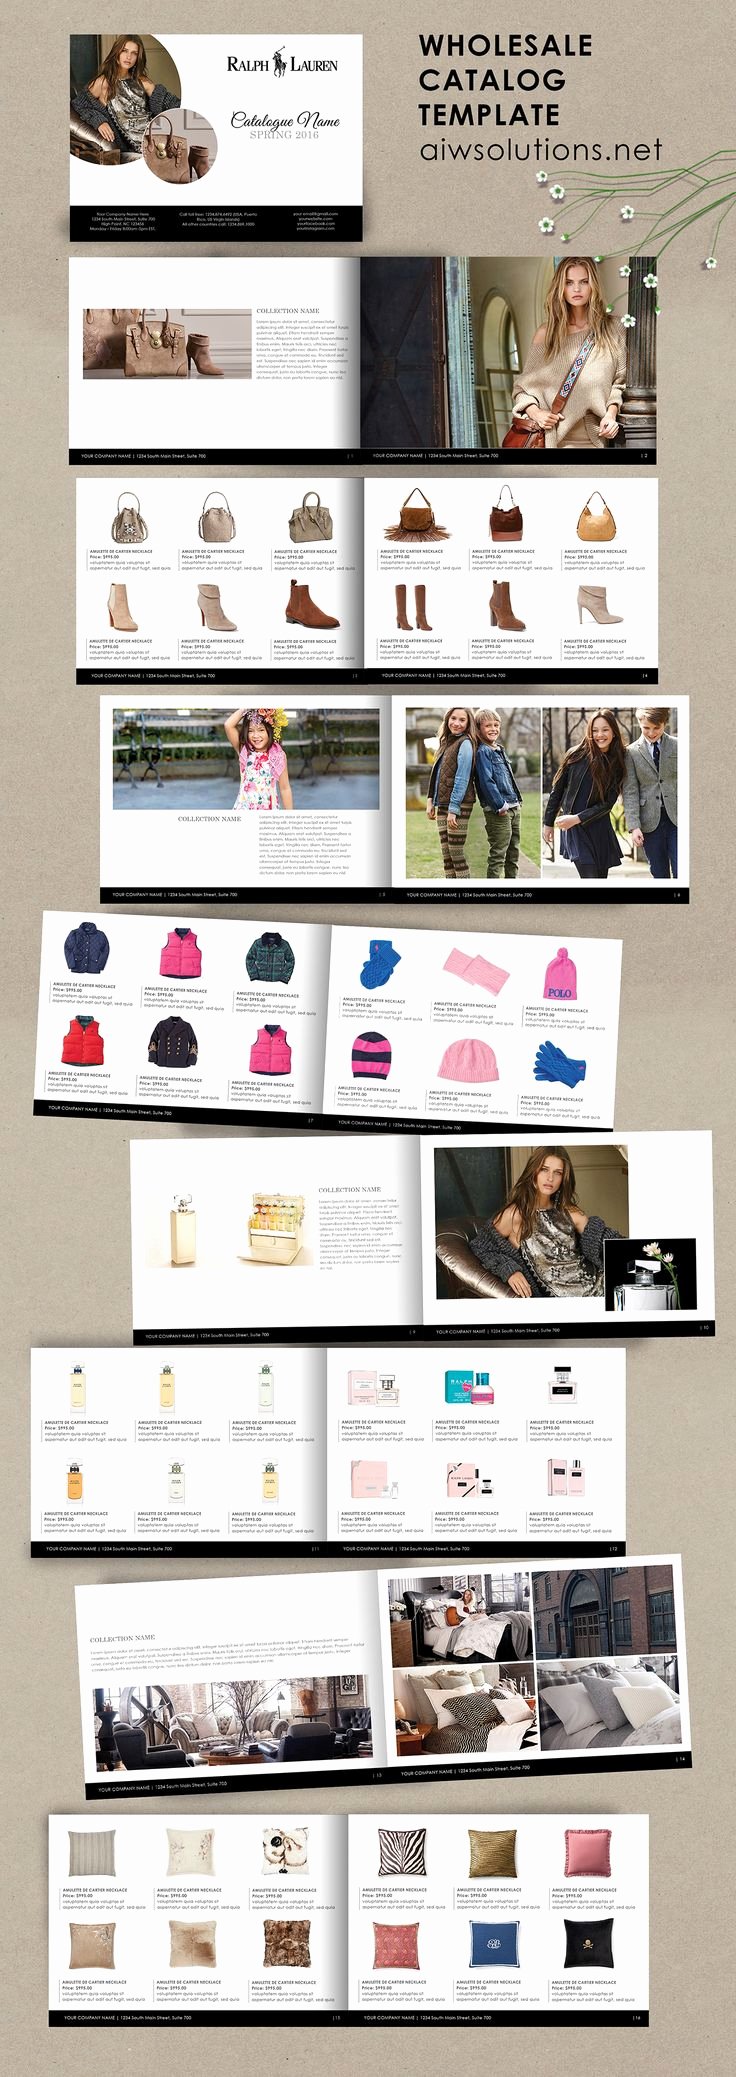 Product Catalog Design Template Luxury 17 Best Ideas About Product Catalog Template On Pinterest